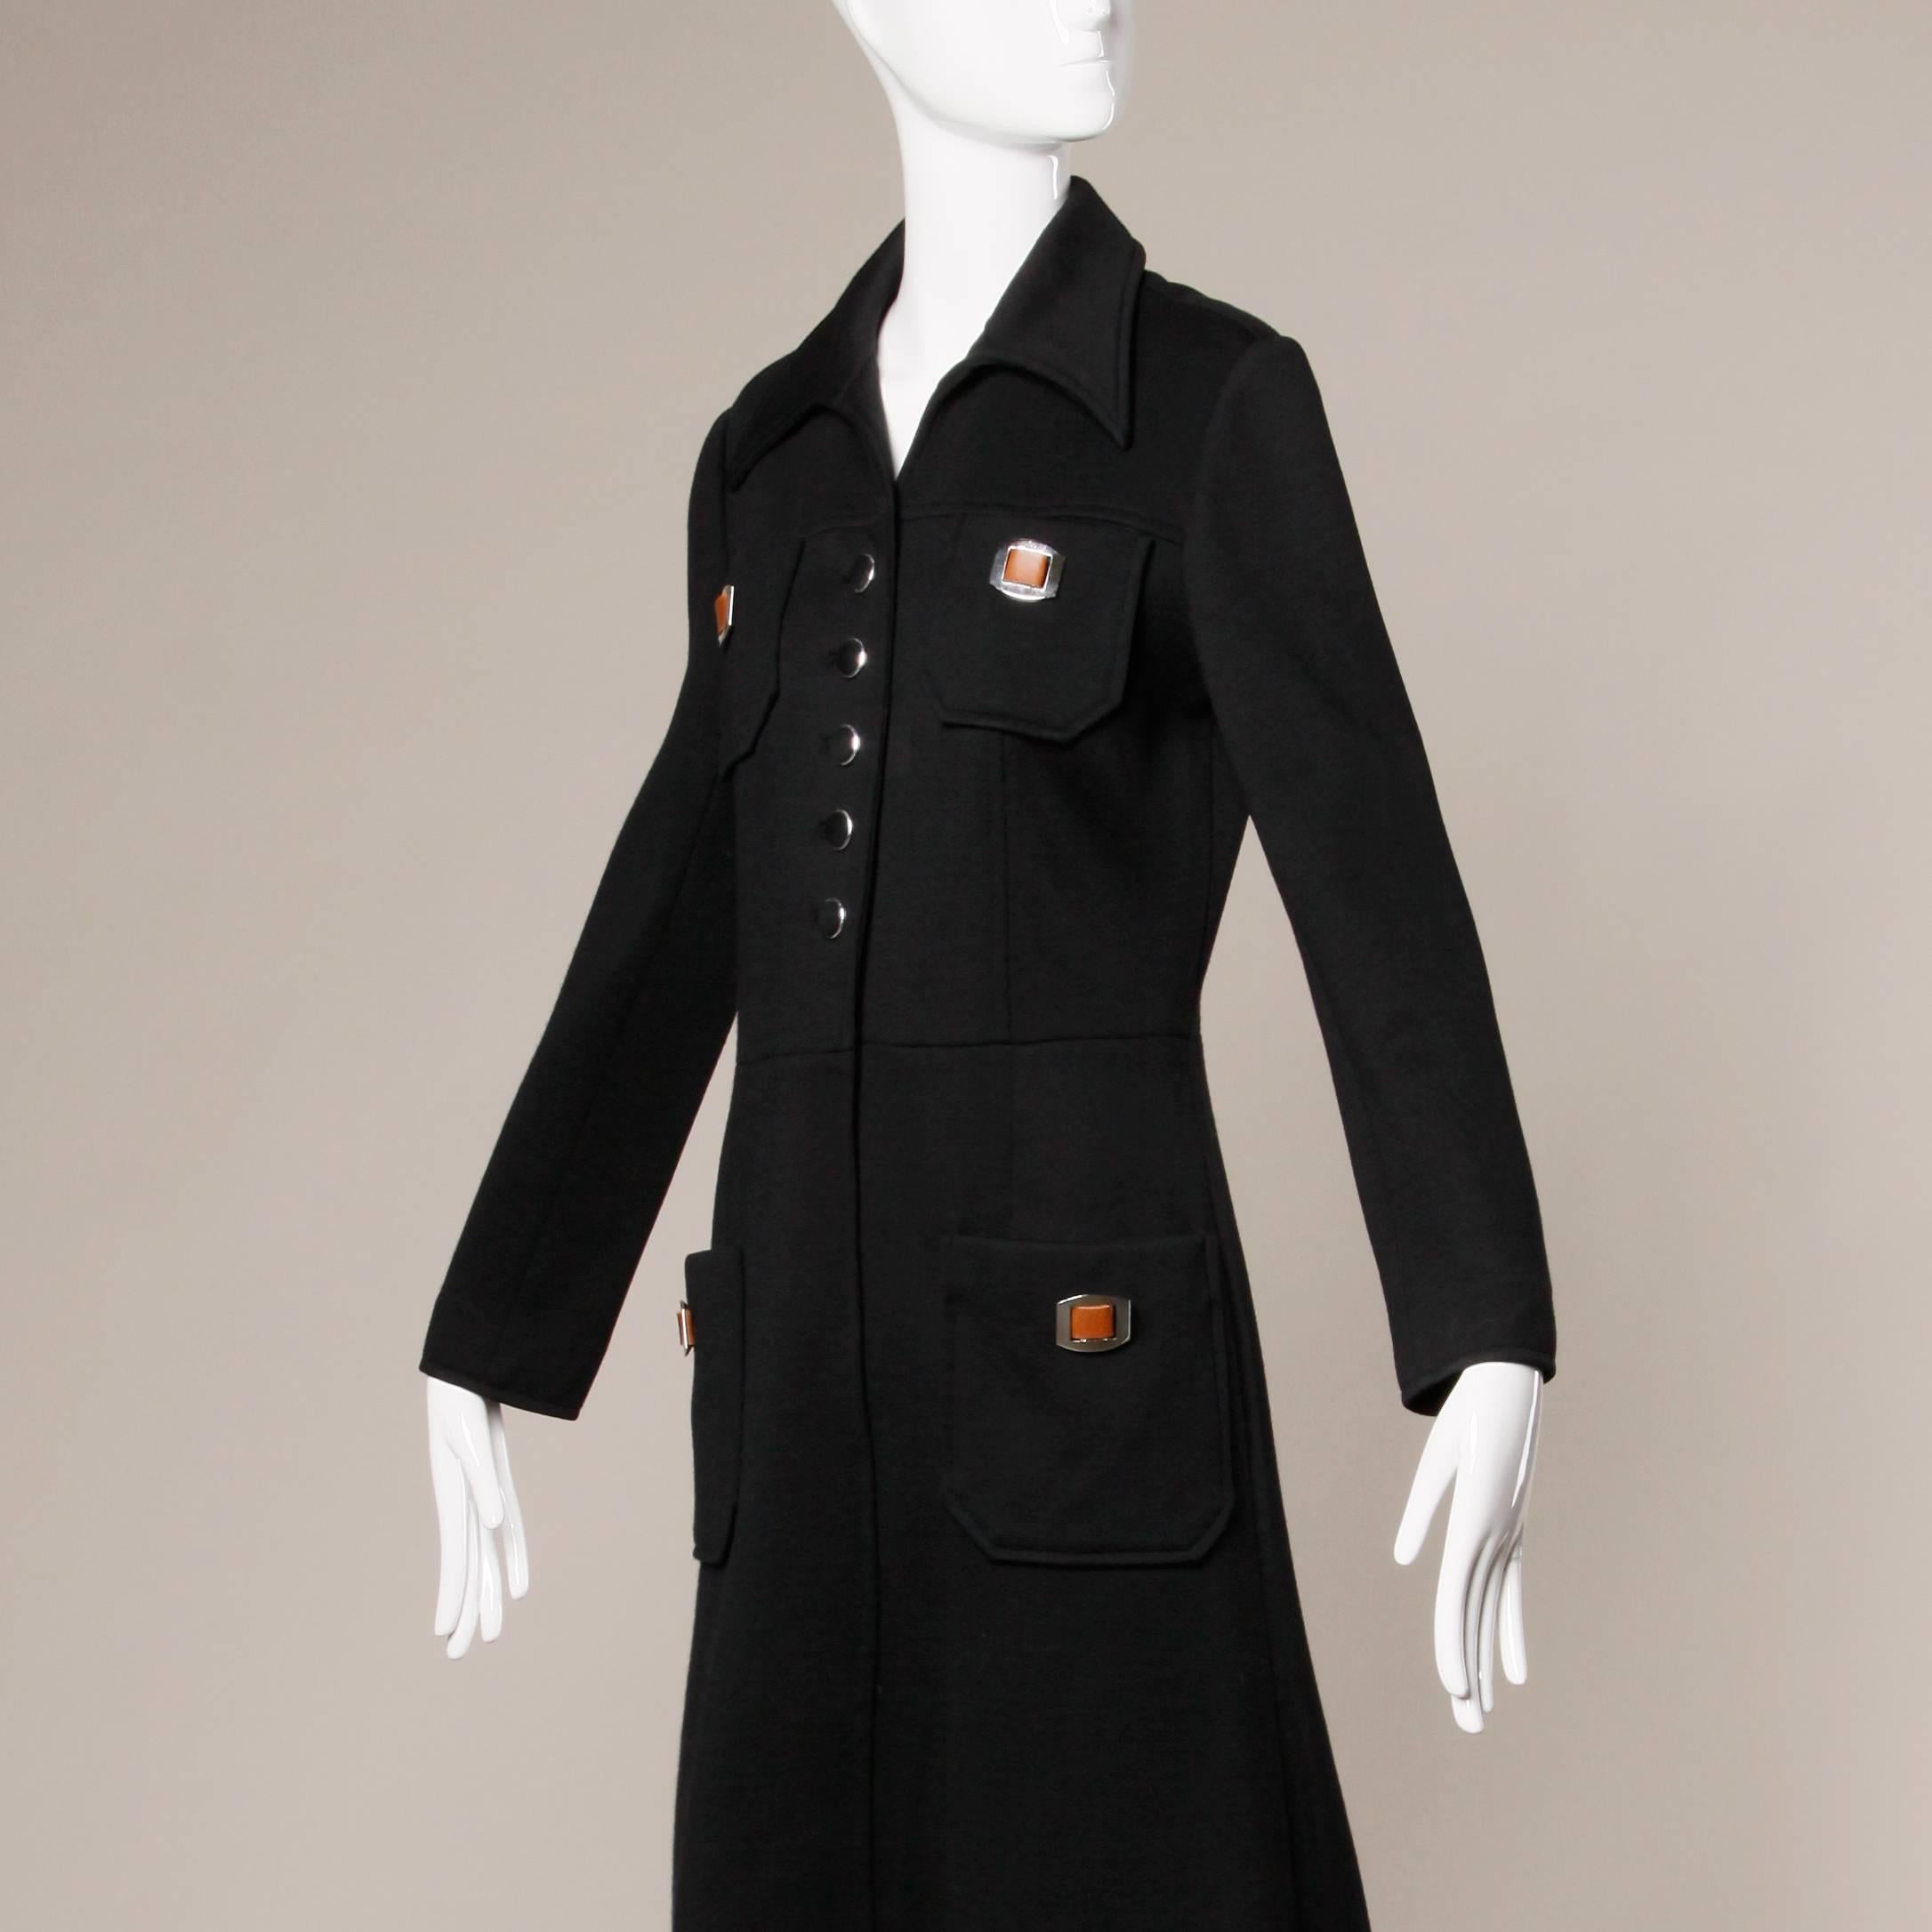 Women's 1960s Banff Ltd. by Gianni Ferri Italian Wool Coat Dress with Leather Buckles